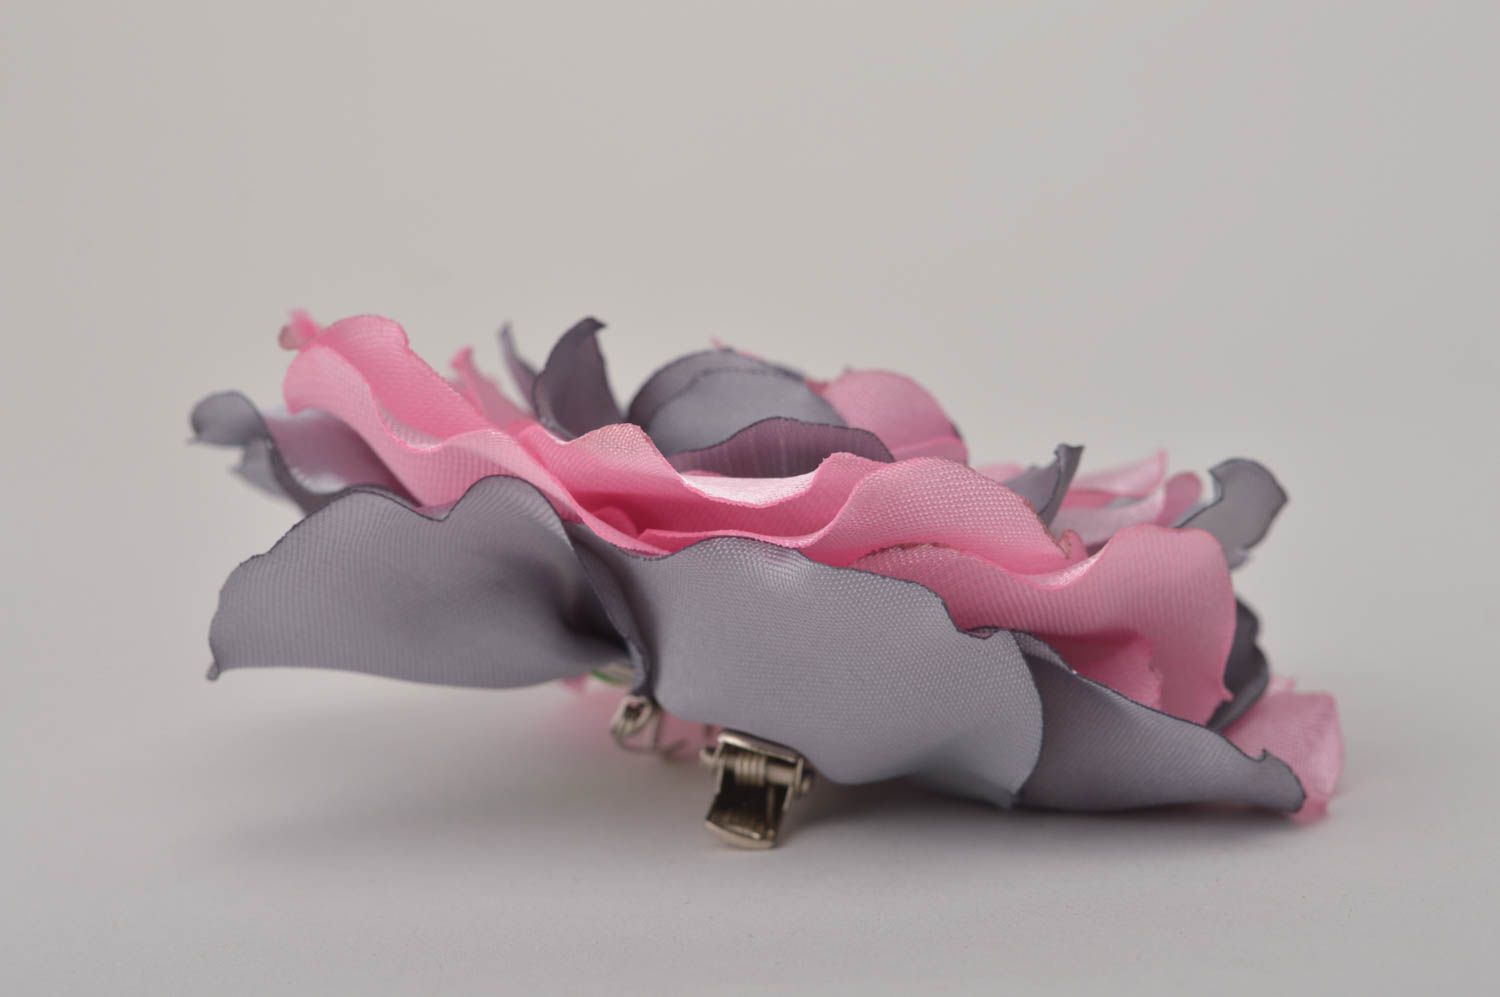 Handmade Schmuck Brosche zarte Haarspange Blume Haar Accessoires rosa grau foto 5